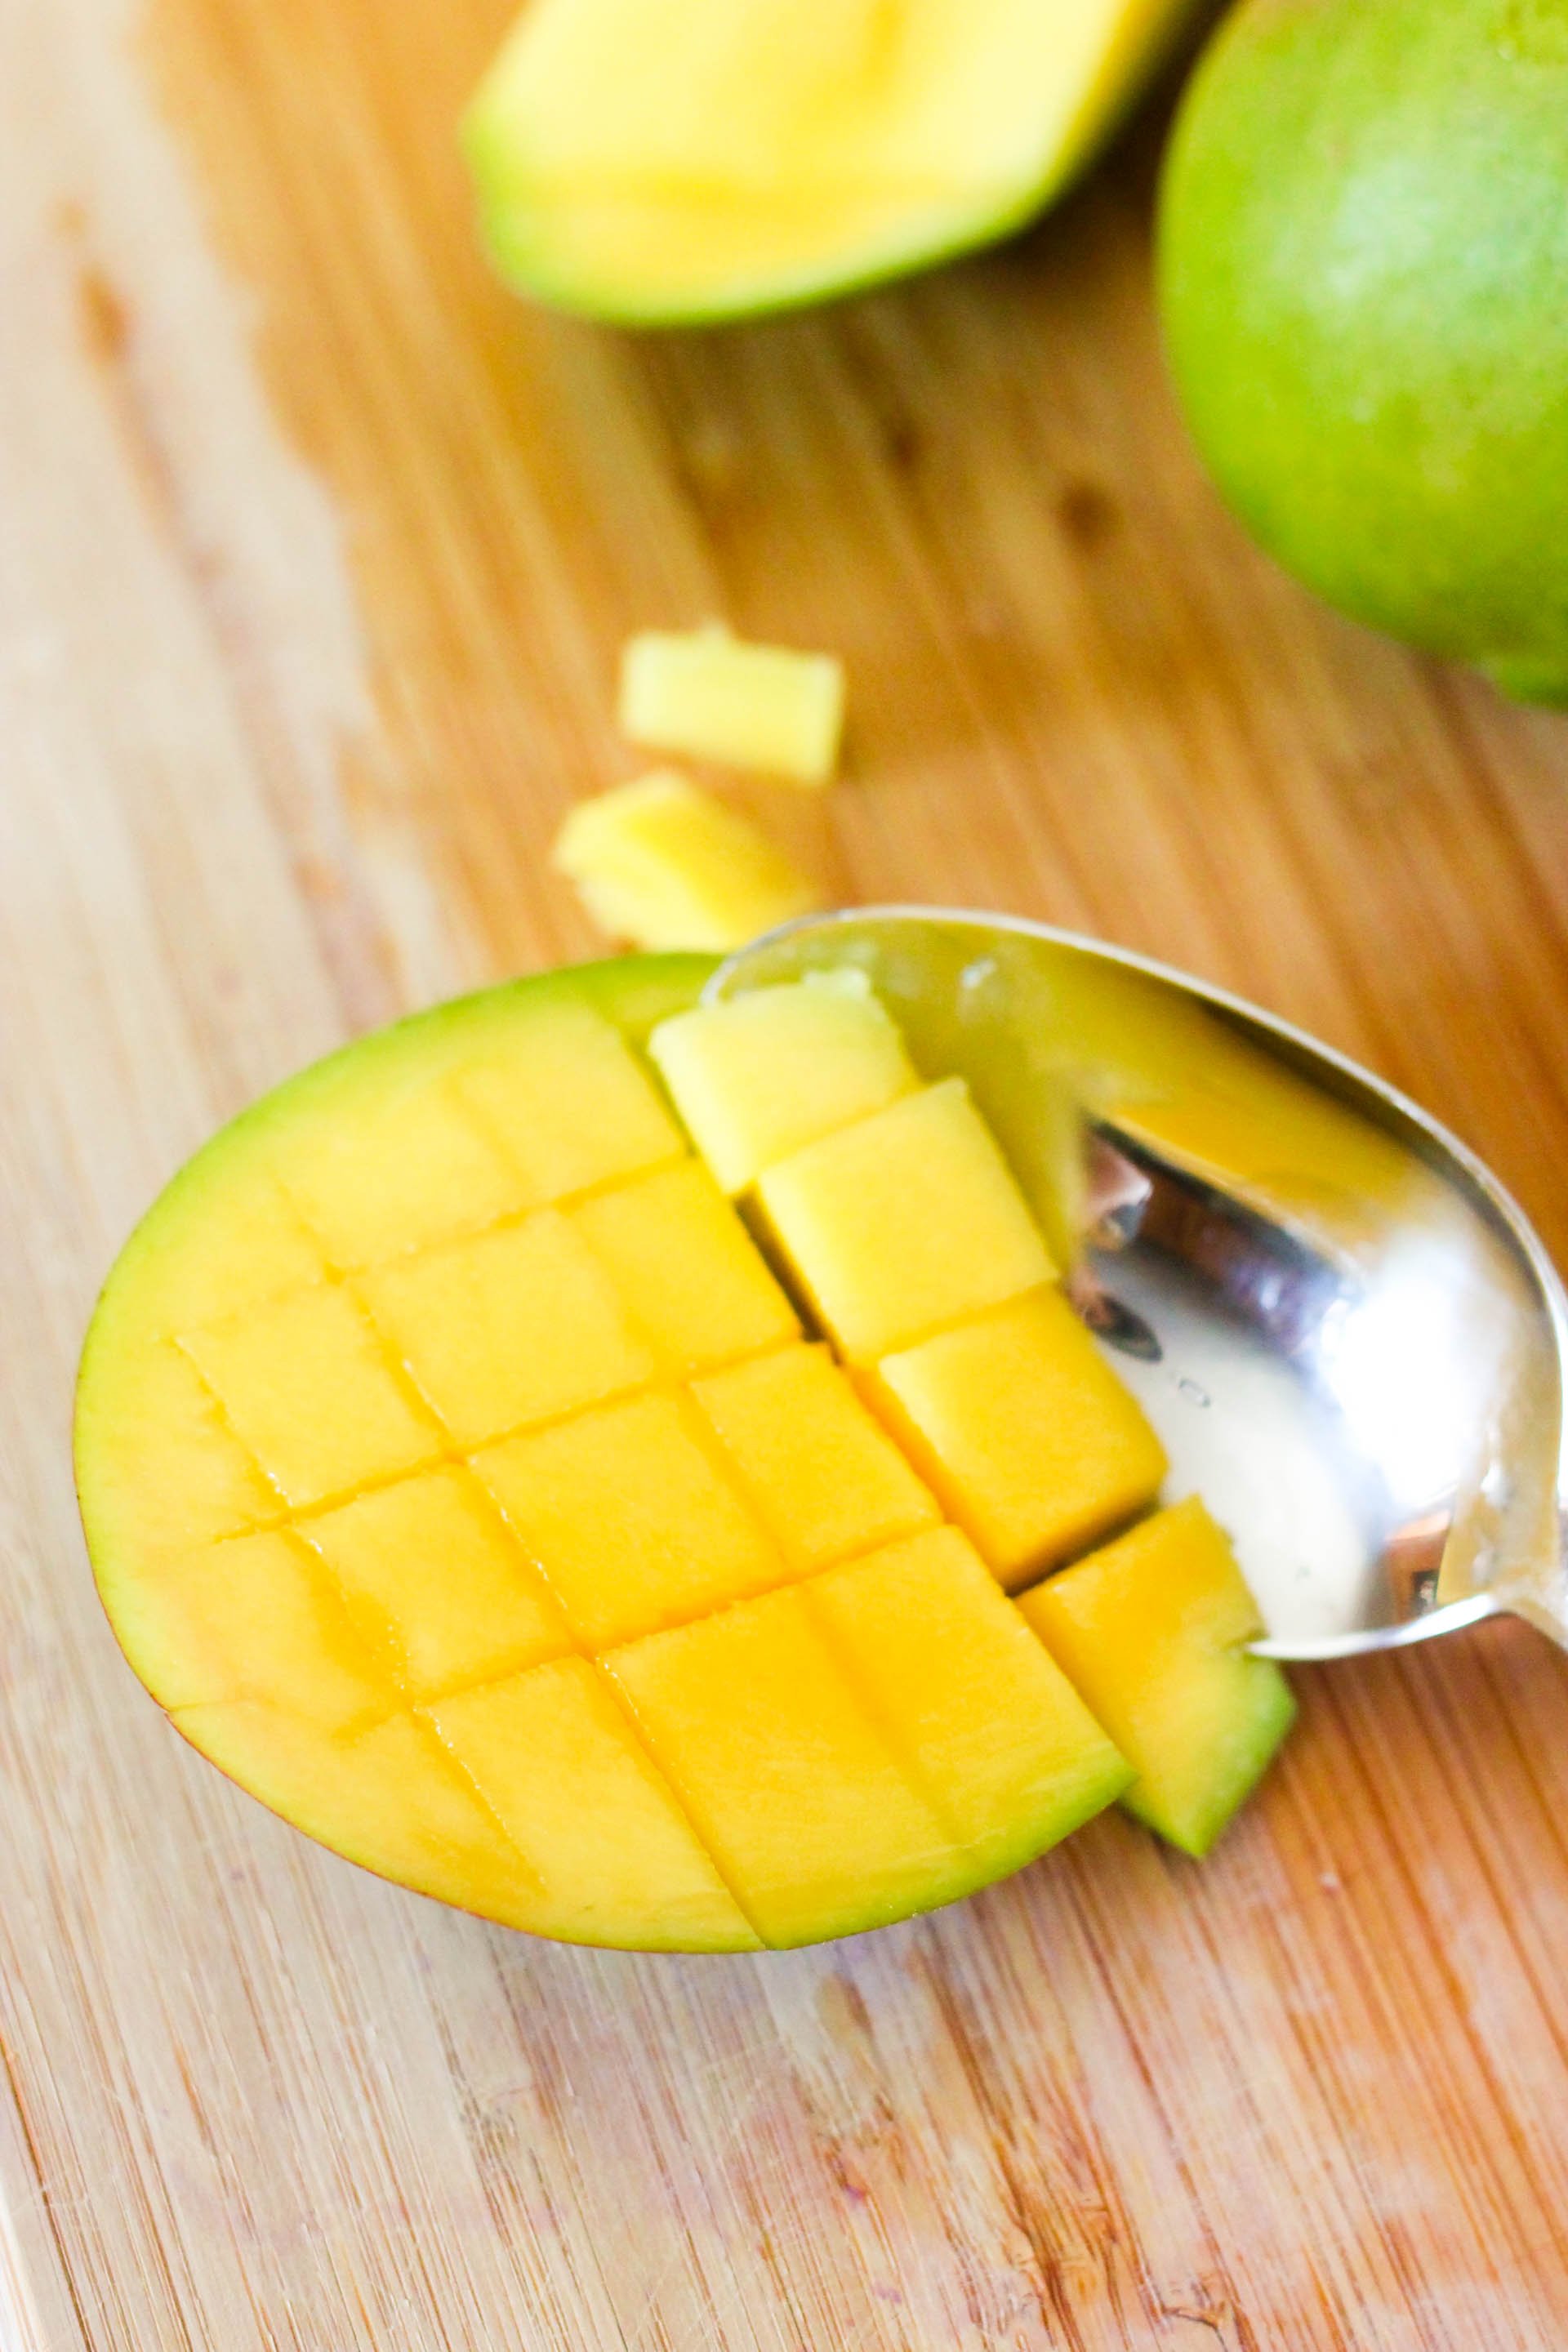 Mango cut in half and cubed